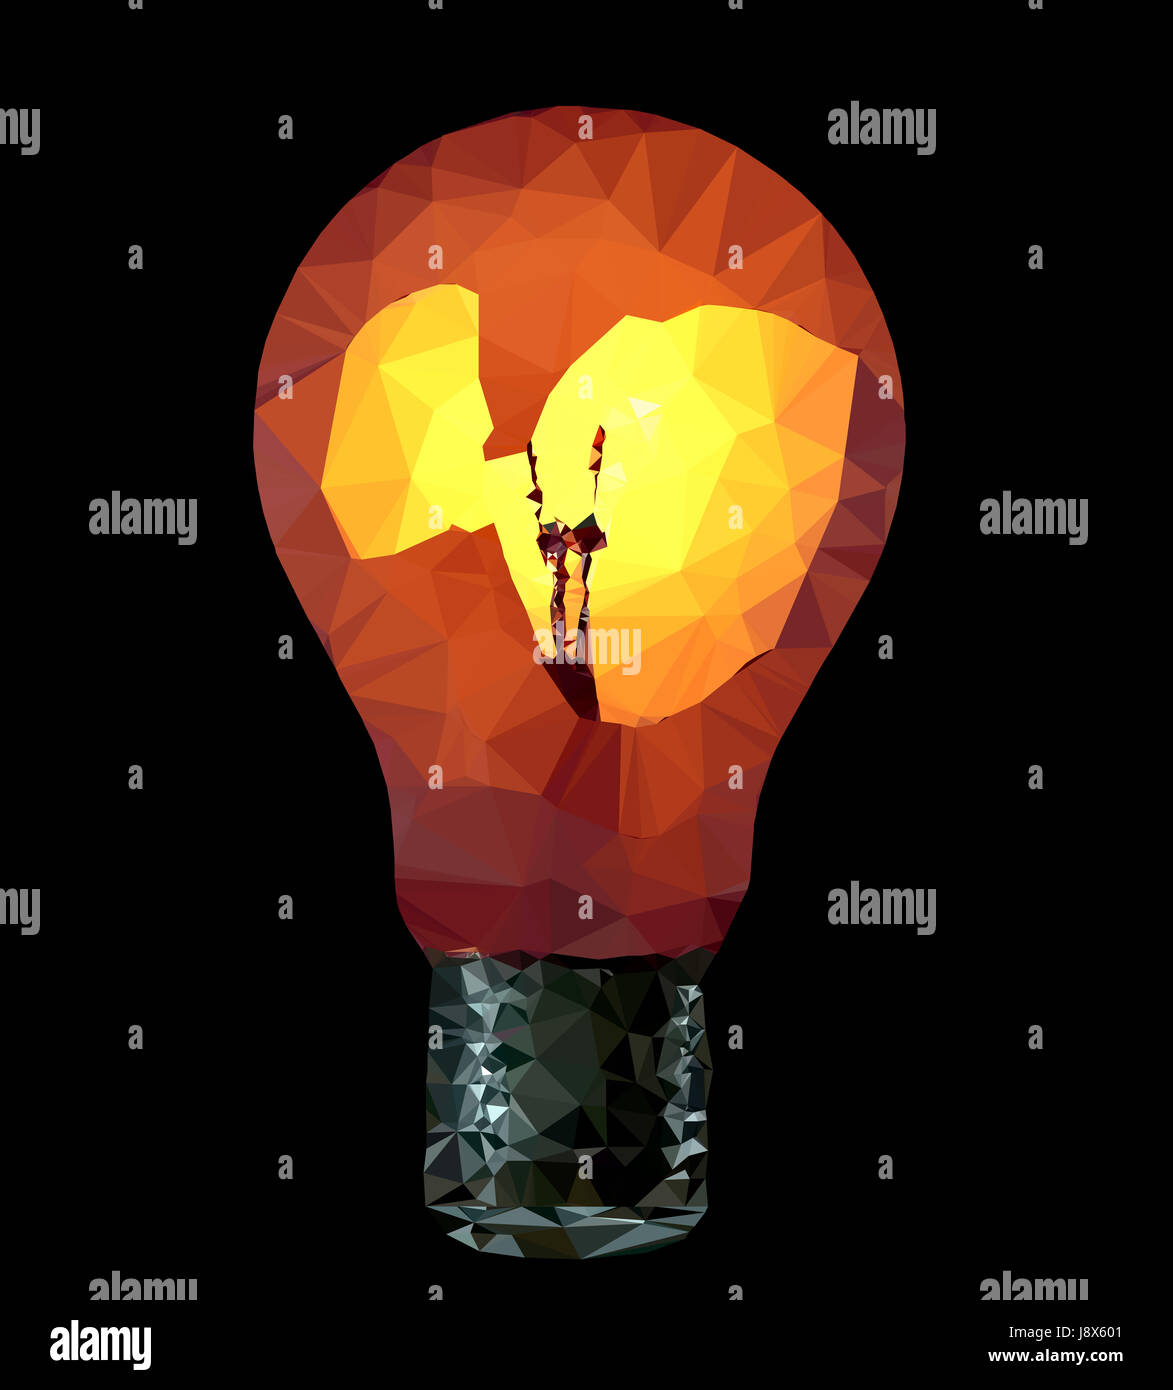 Triagulated Lampe Stockfoto